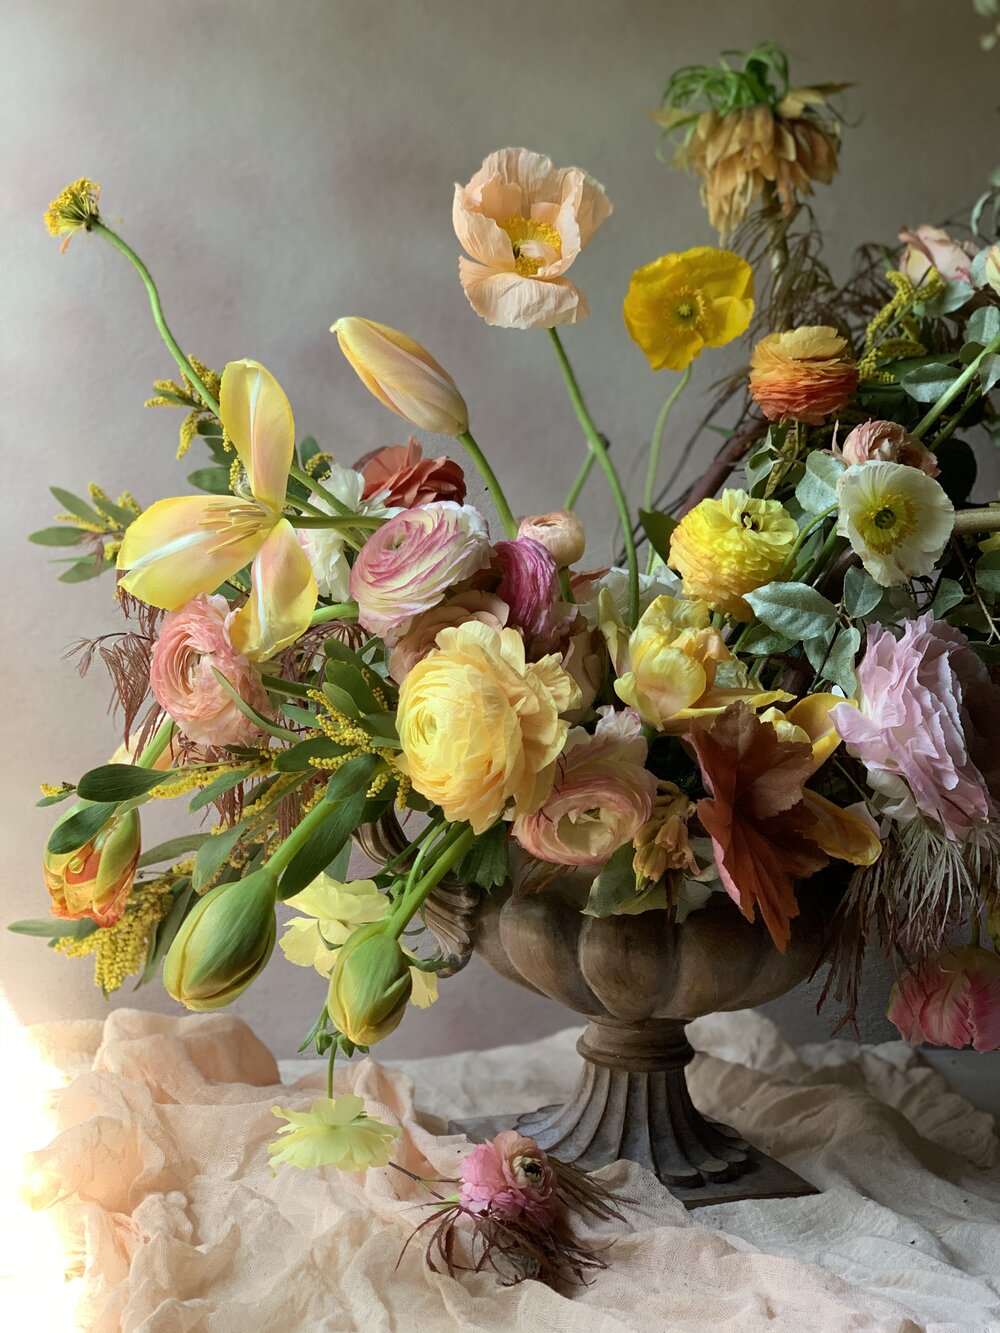 Florals and image by @bouquetatlanta 